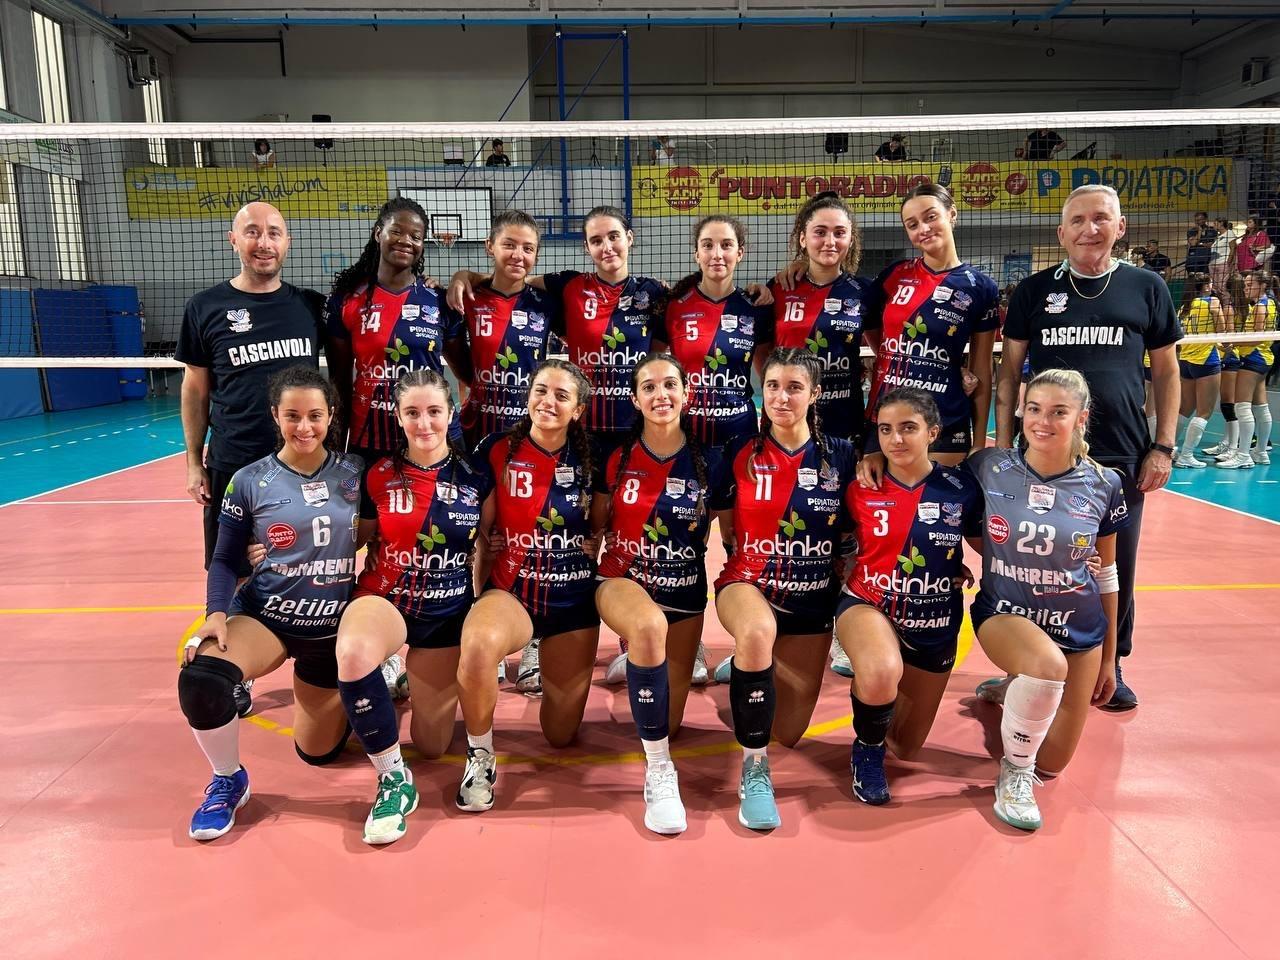 Casciavola's volleyball team earns away point on first Serie D match